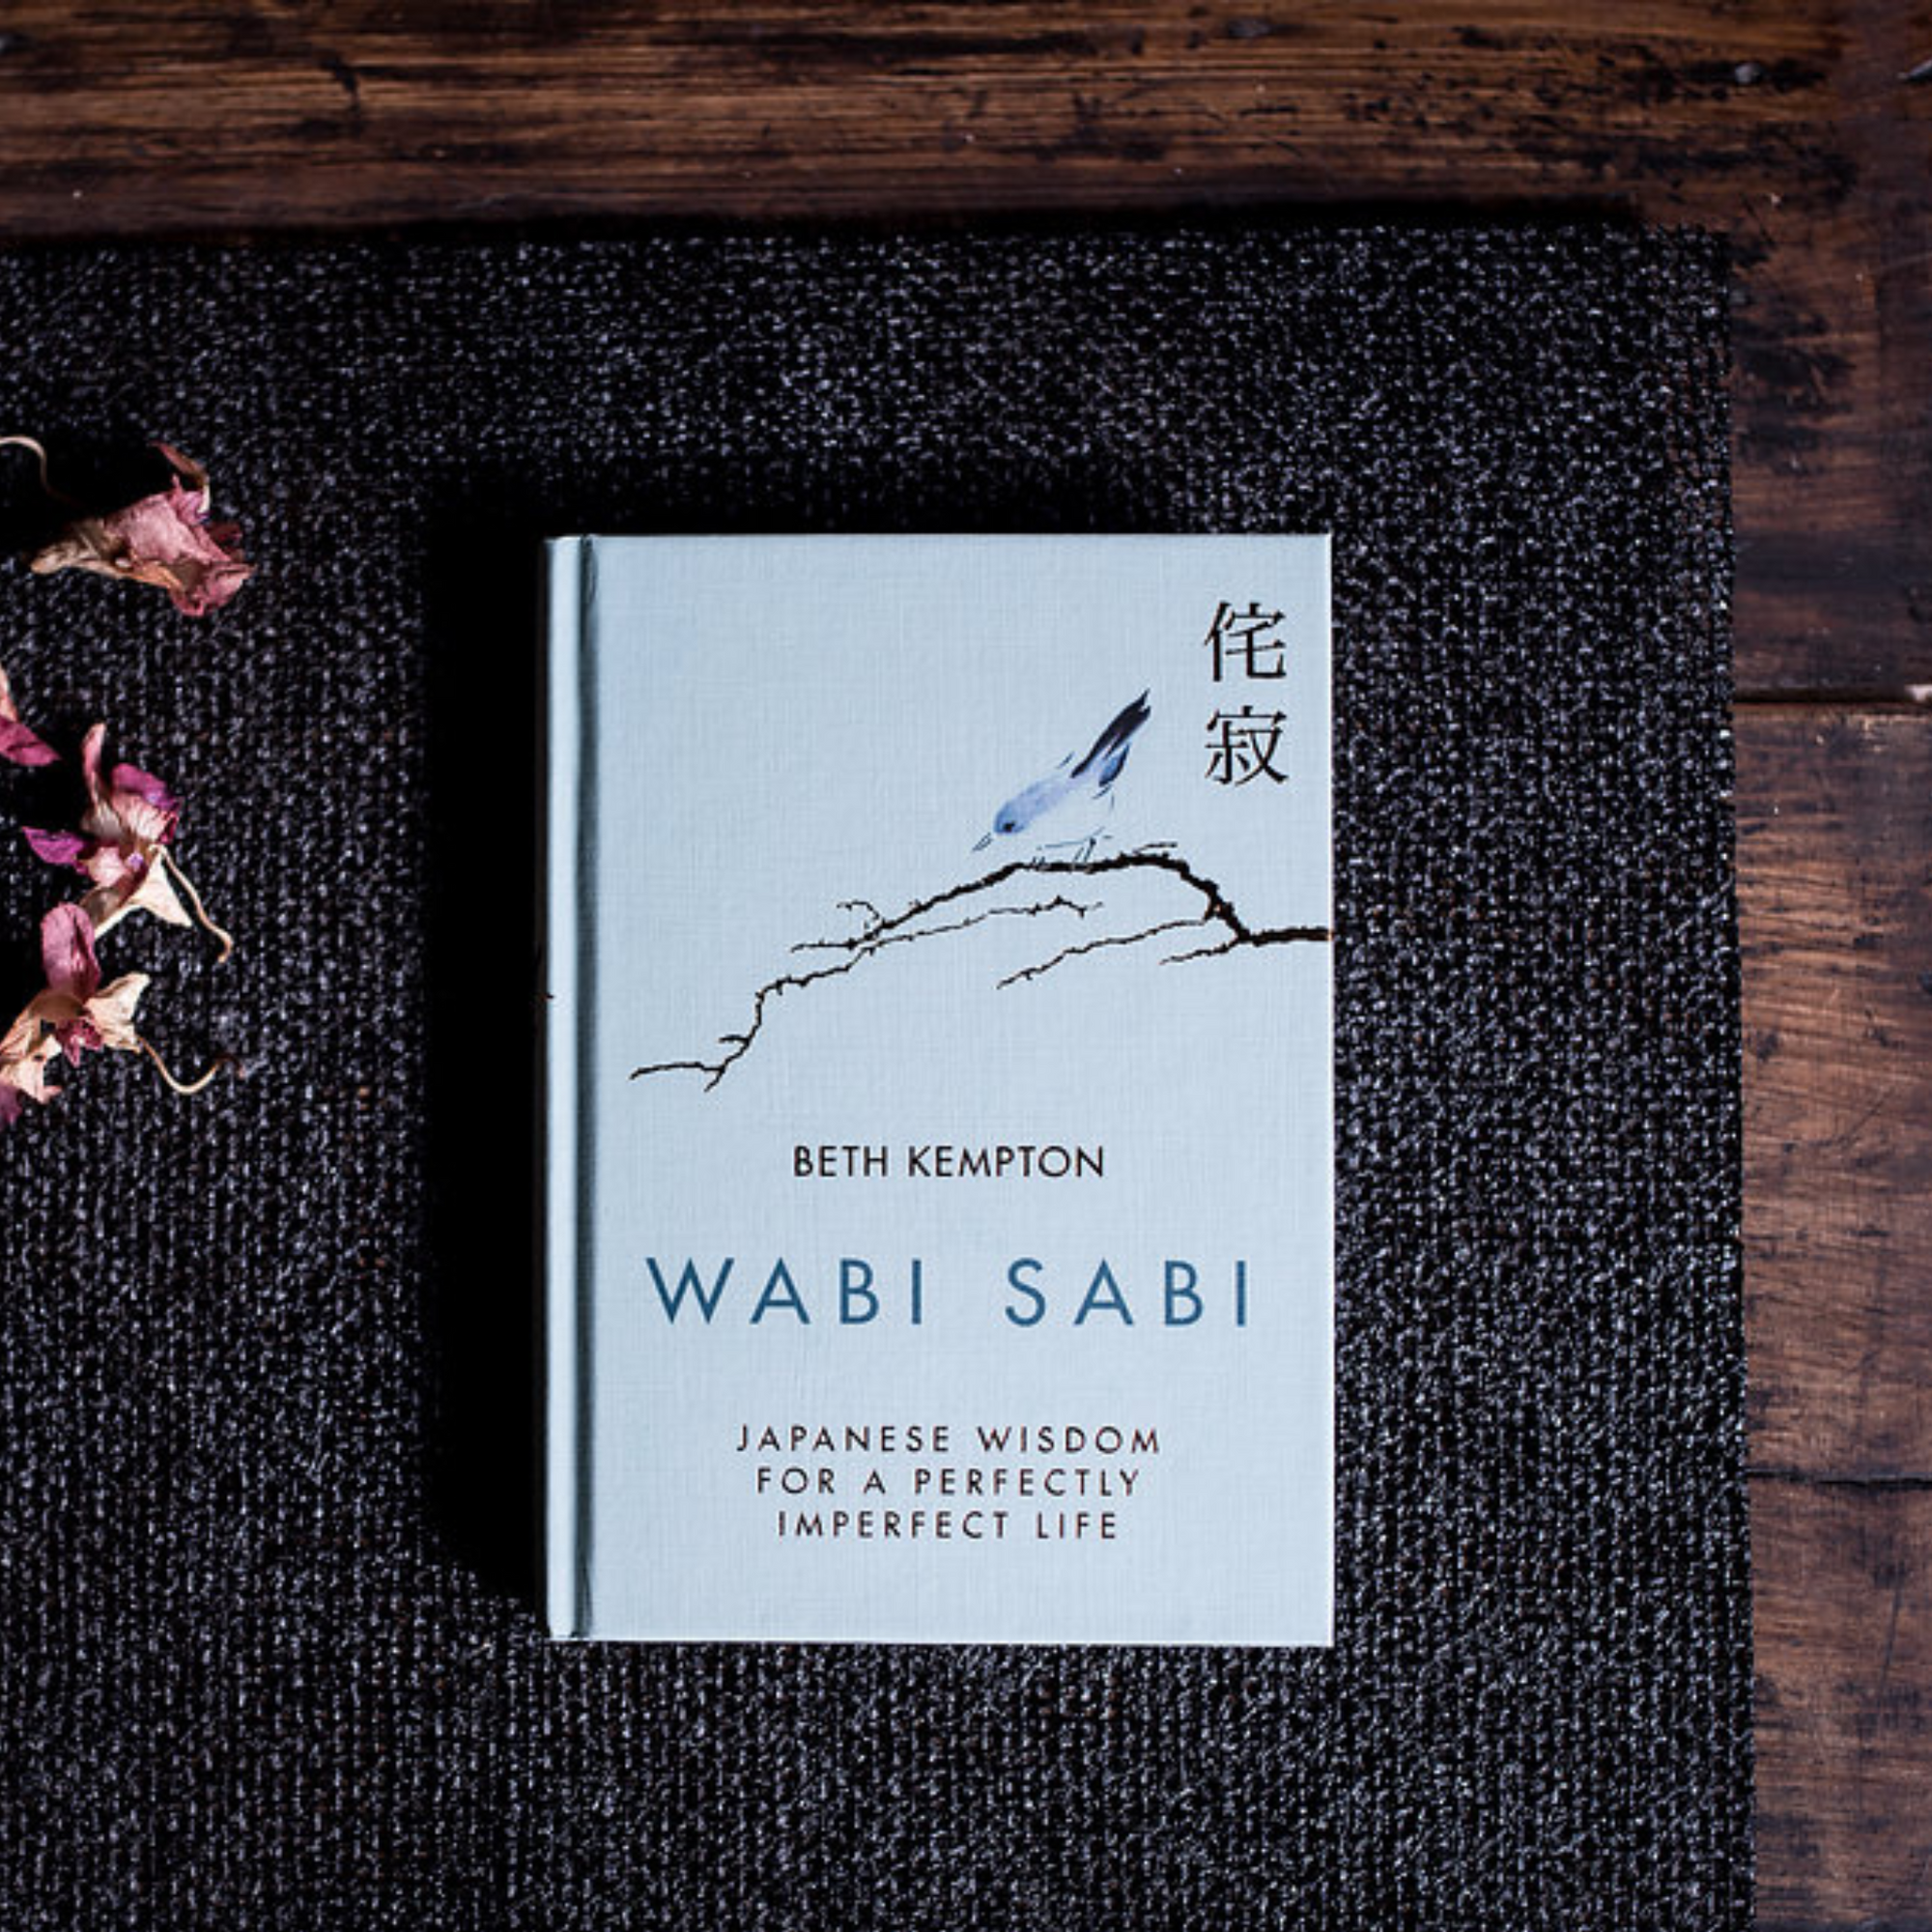 Wabi Sabi by Beth Kempton (signed copy)